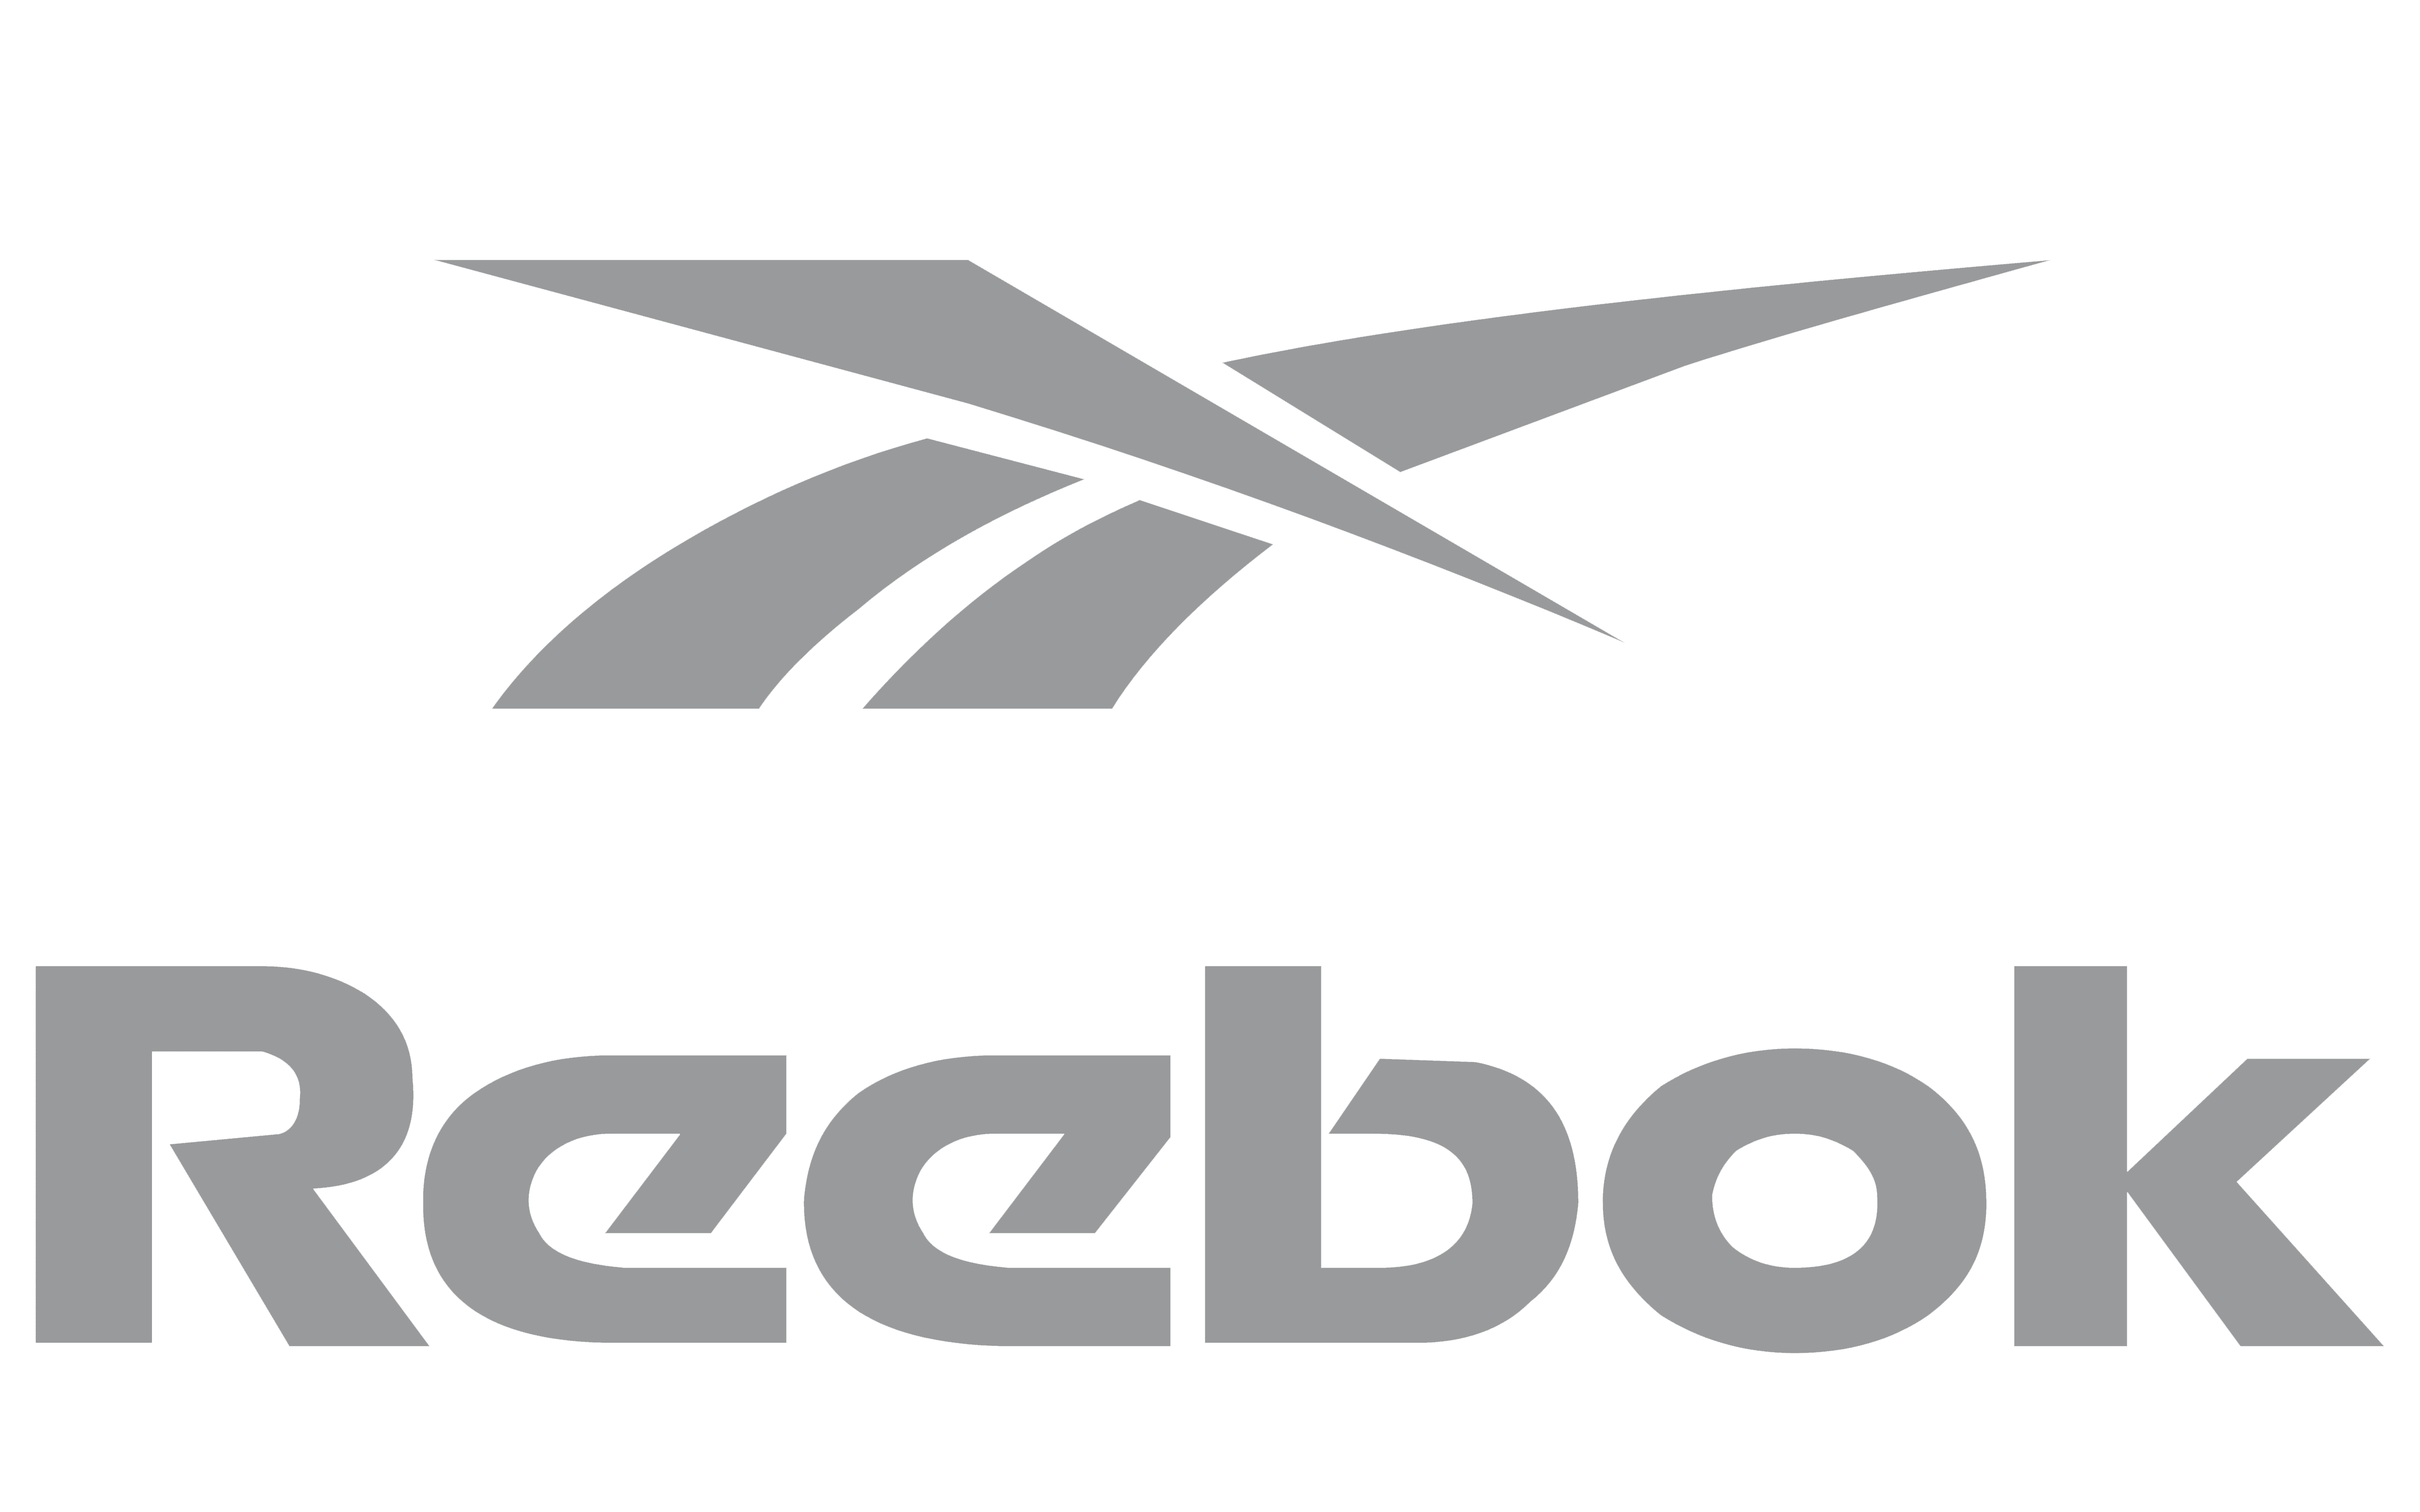 Reebok logos, 1970s–2002 - Fonts In Use